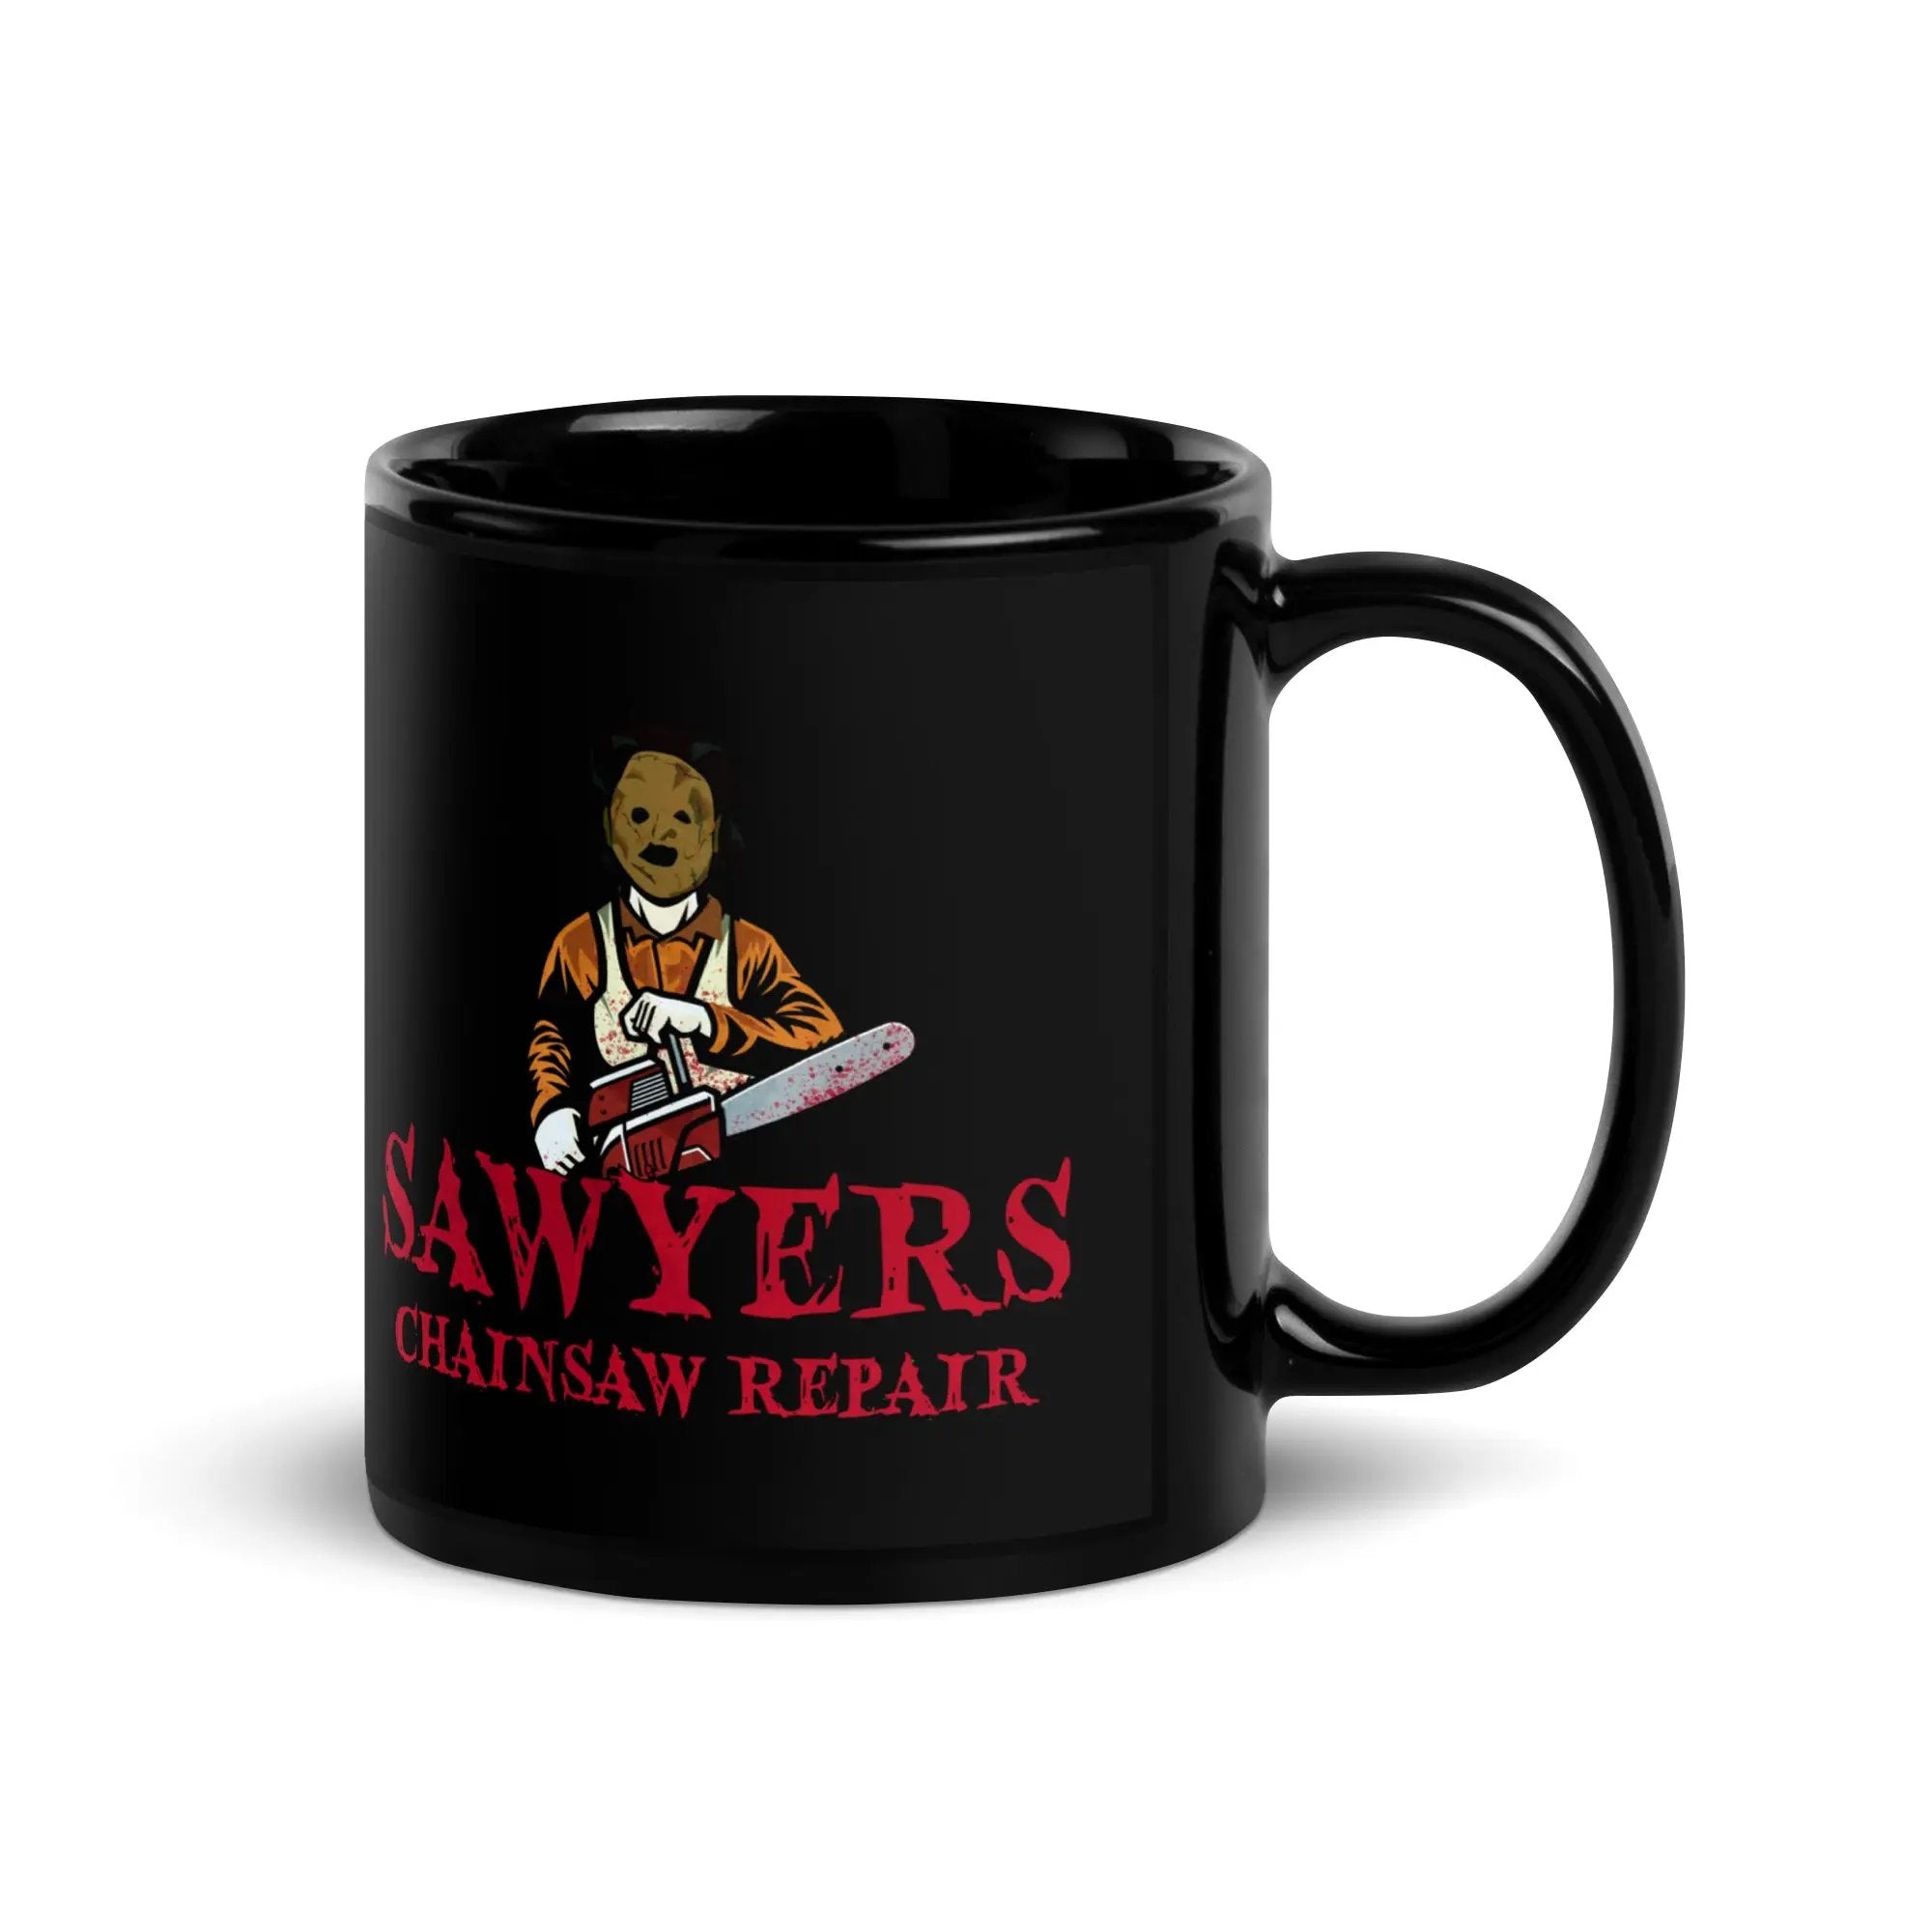 Sawyers Chainsaw Repair Black Glossy Mug